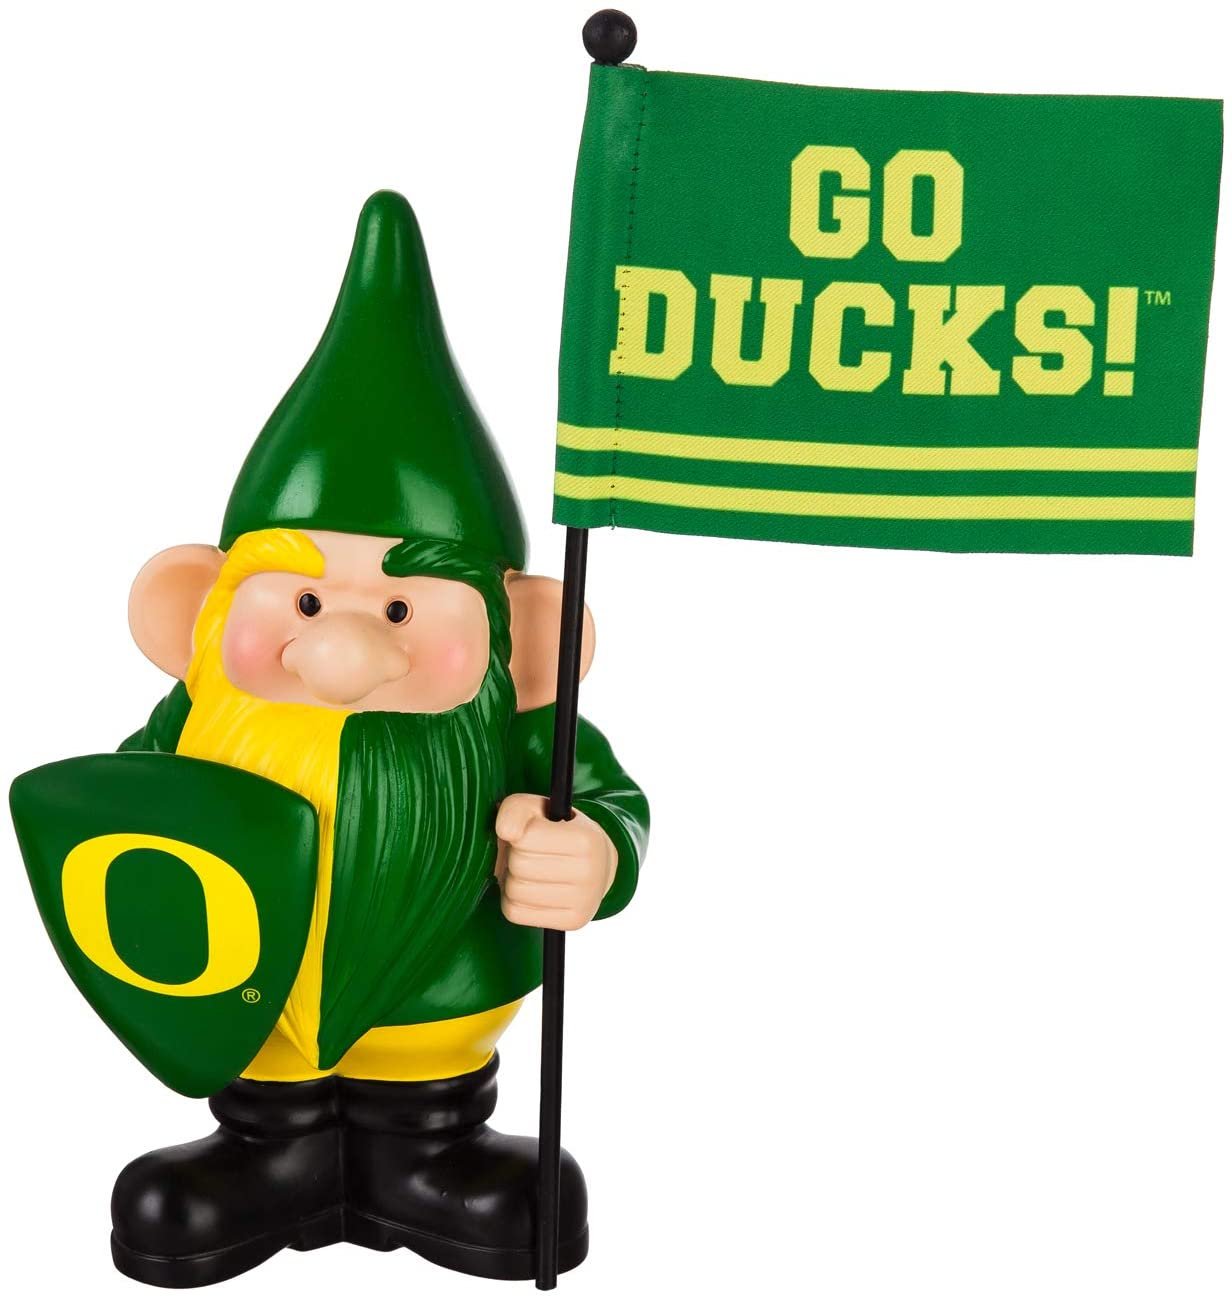 University of Oregon Ducks 10 Inch Outdoor Garden Gnome, Includes Team Flag